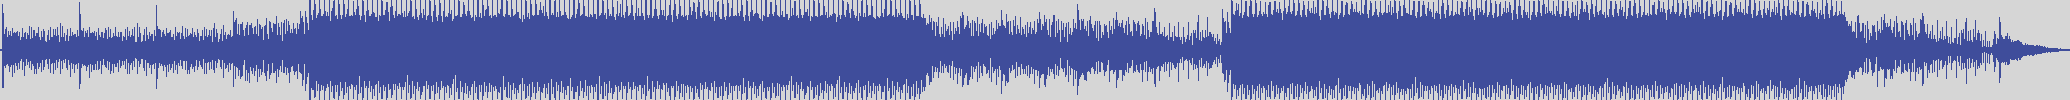 nf_boyz_records [NFY018] Kyle Romans - Hammers [Hardbass Mix] audio wave form